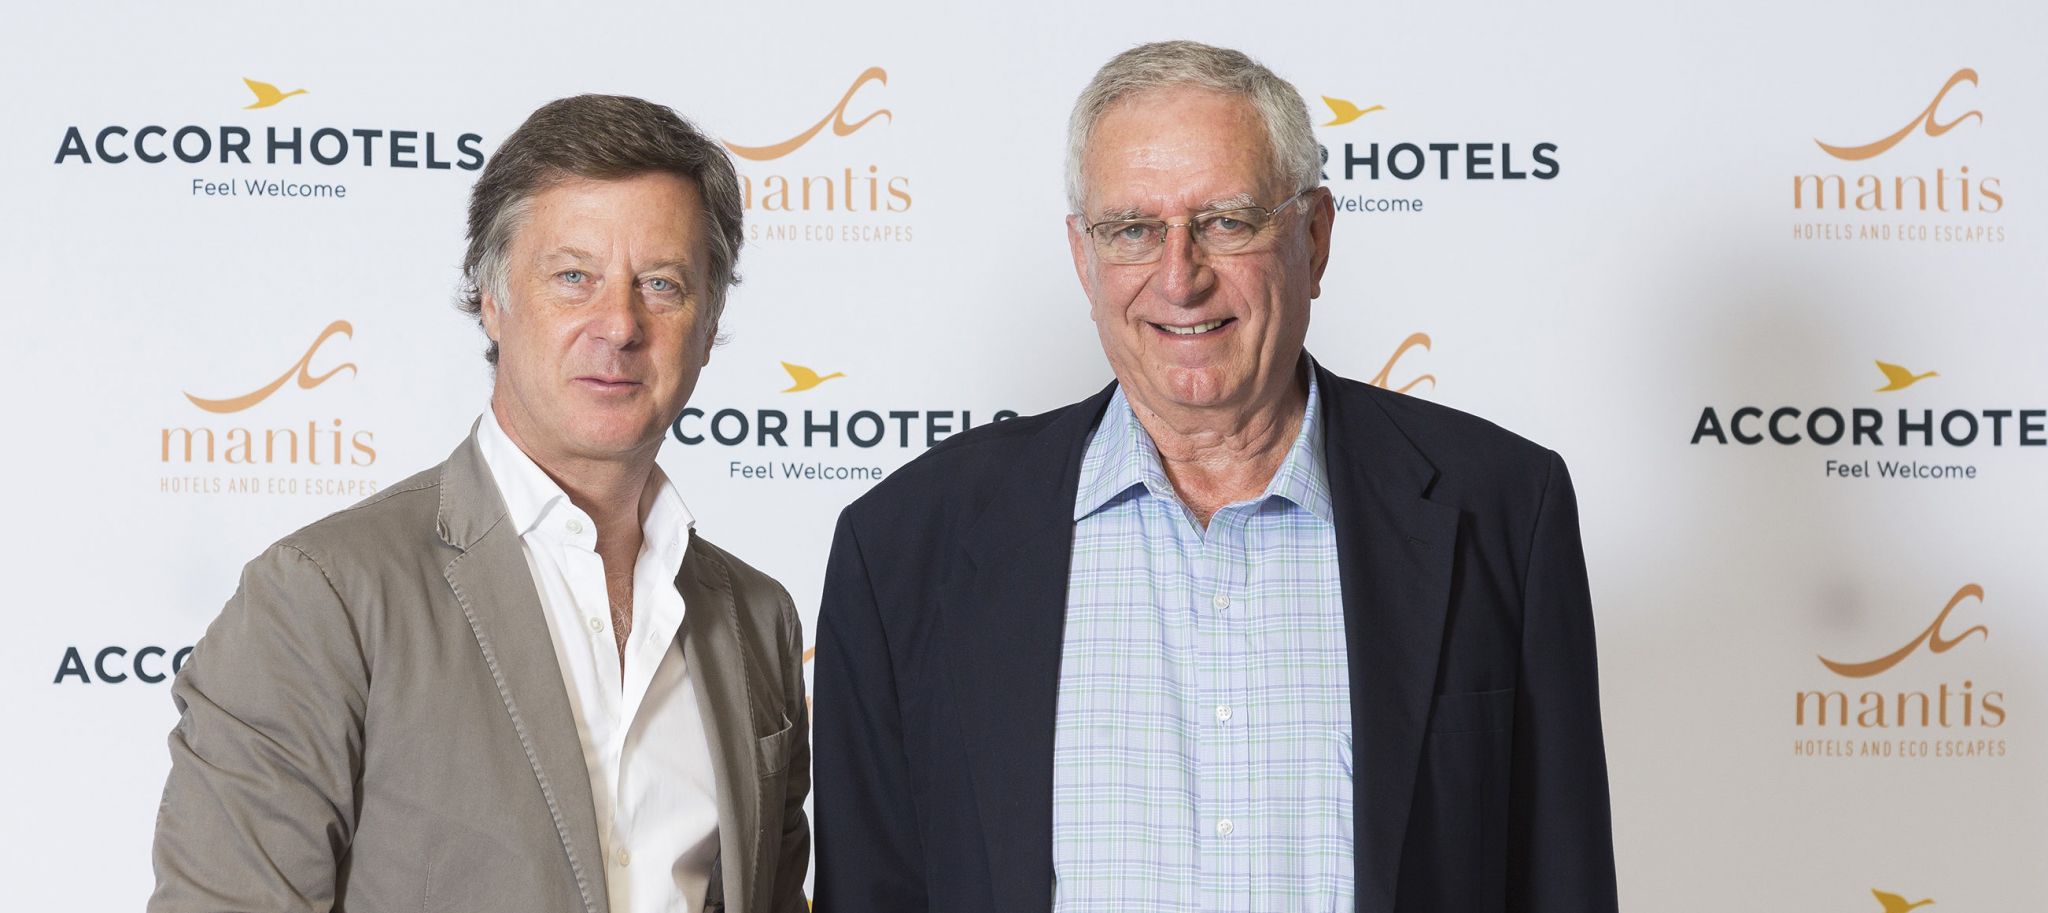 (L) Accor CEO, Sebastien Bazin with (R) Founder/Chairman of Mantis, Adrian Gardiner